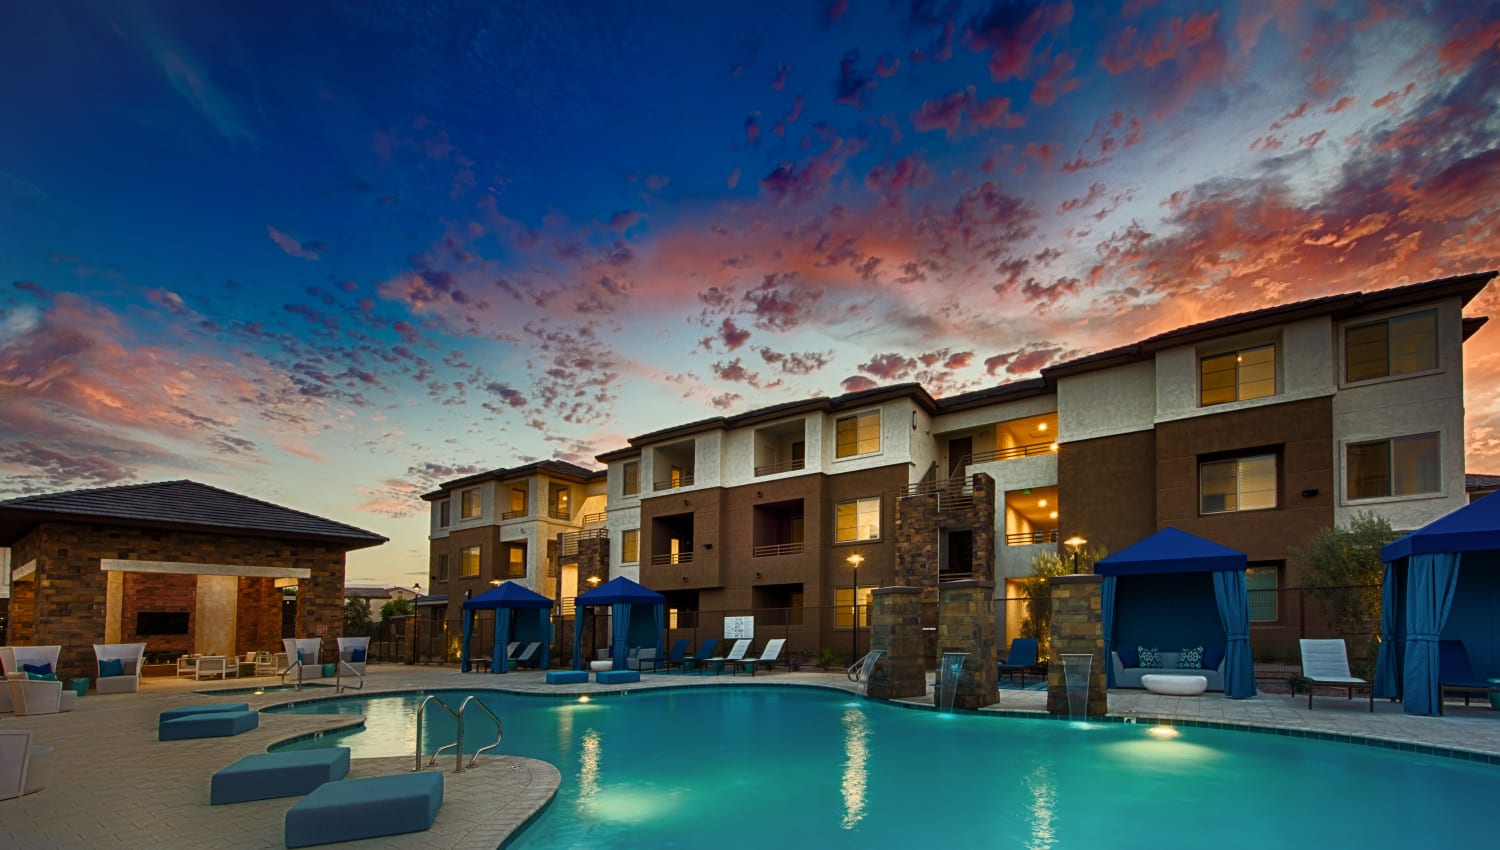 Resort-style swimming pool at dusk at Ocio Plaza Del Rio in Peoria, Arizona